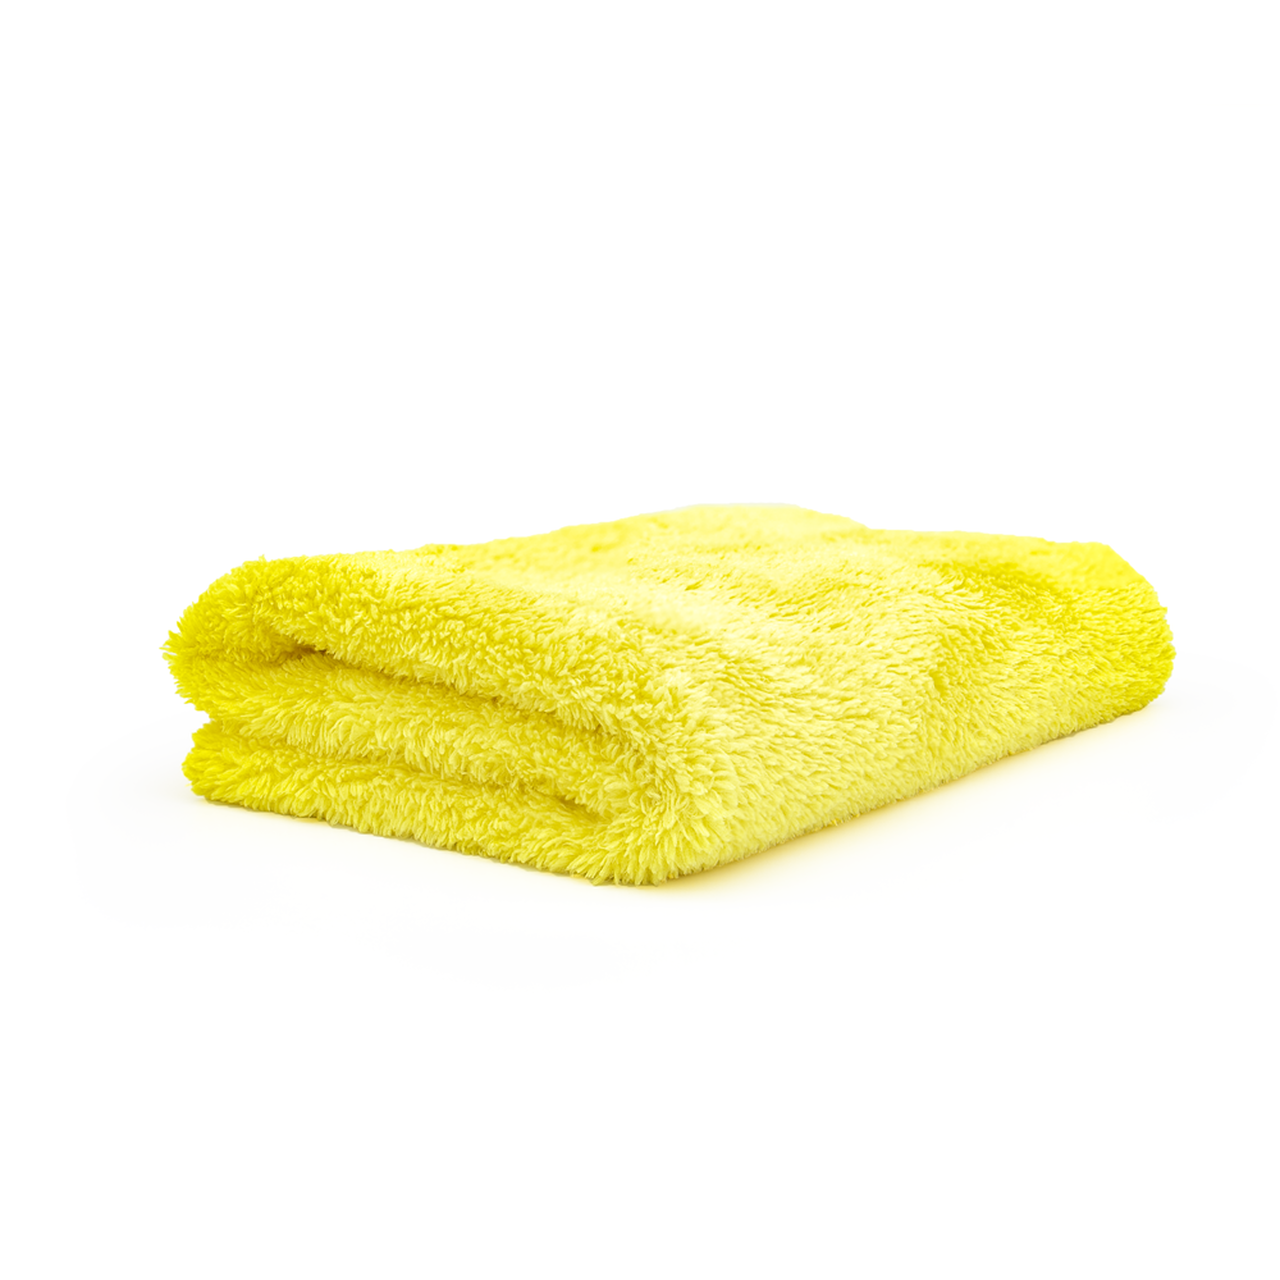 The Rag Company Eagle Edgeless 350 16x16 Plush Microfiber towel-Yellow